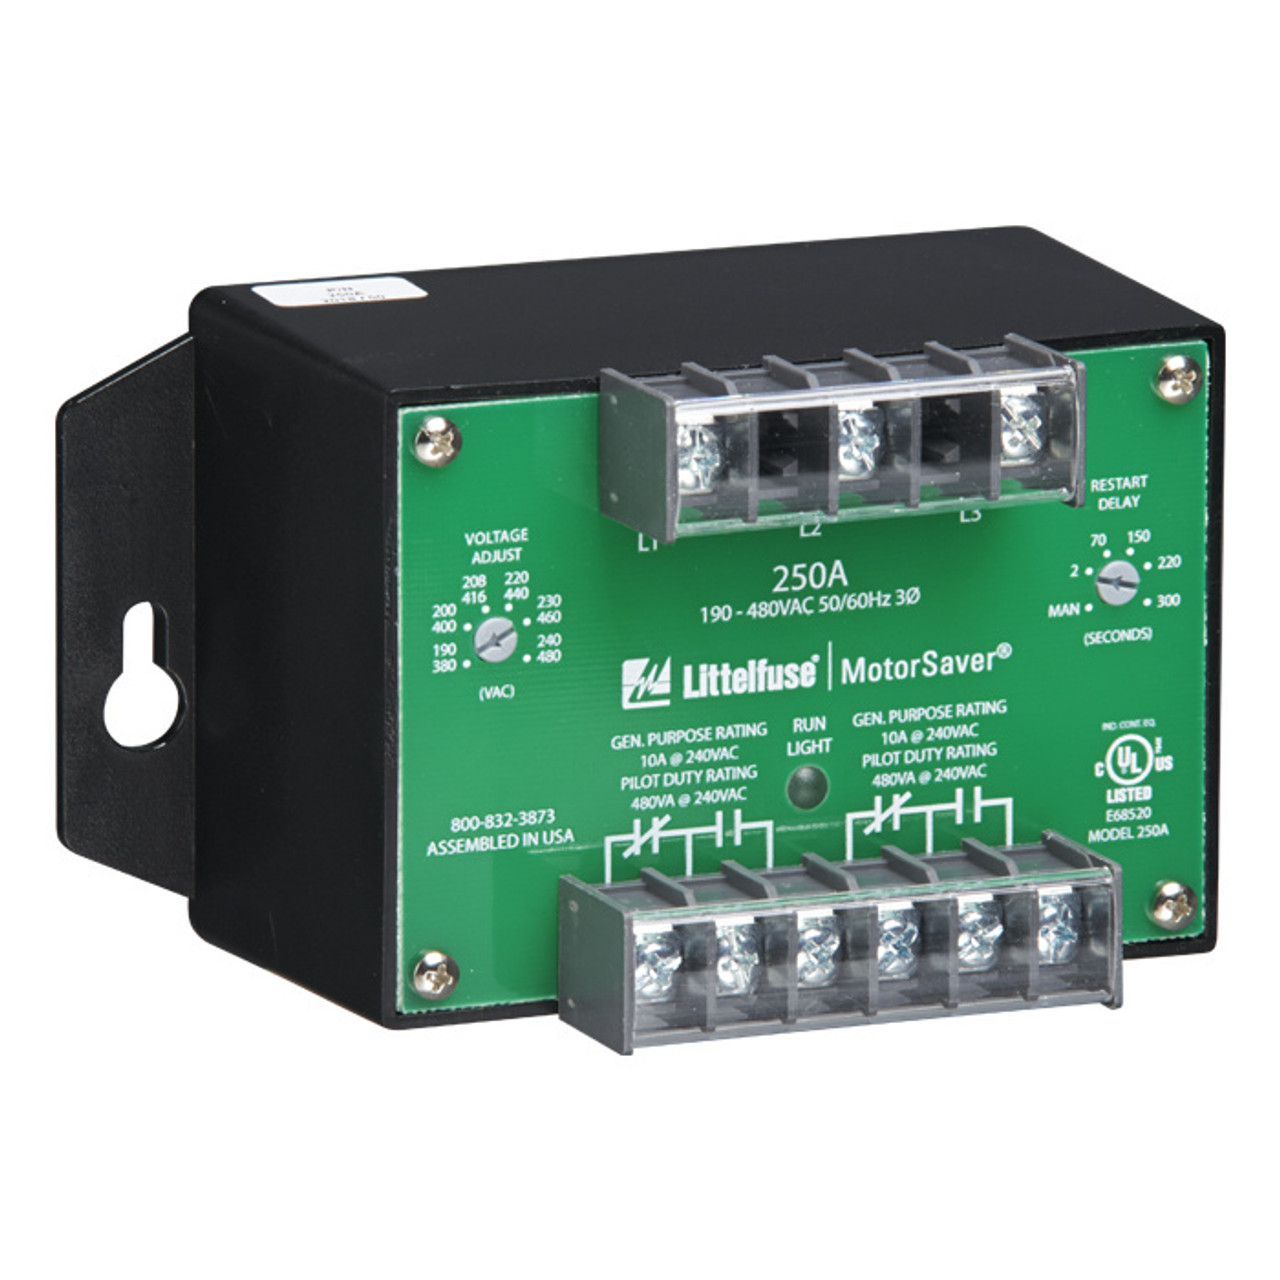 Littelfuse-Symcom 250-100-MET Voltage Monitor Relays